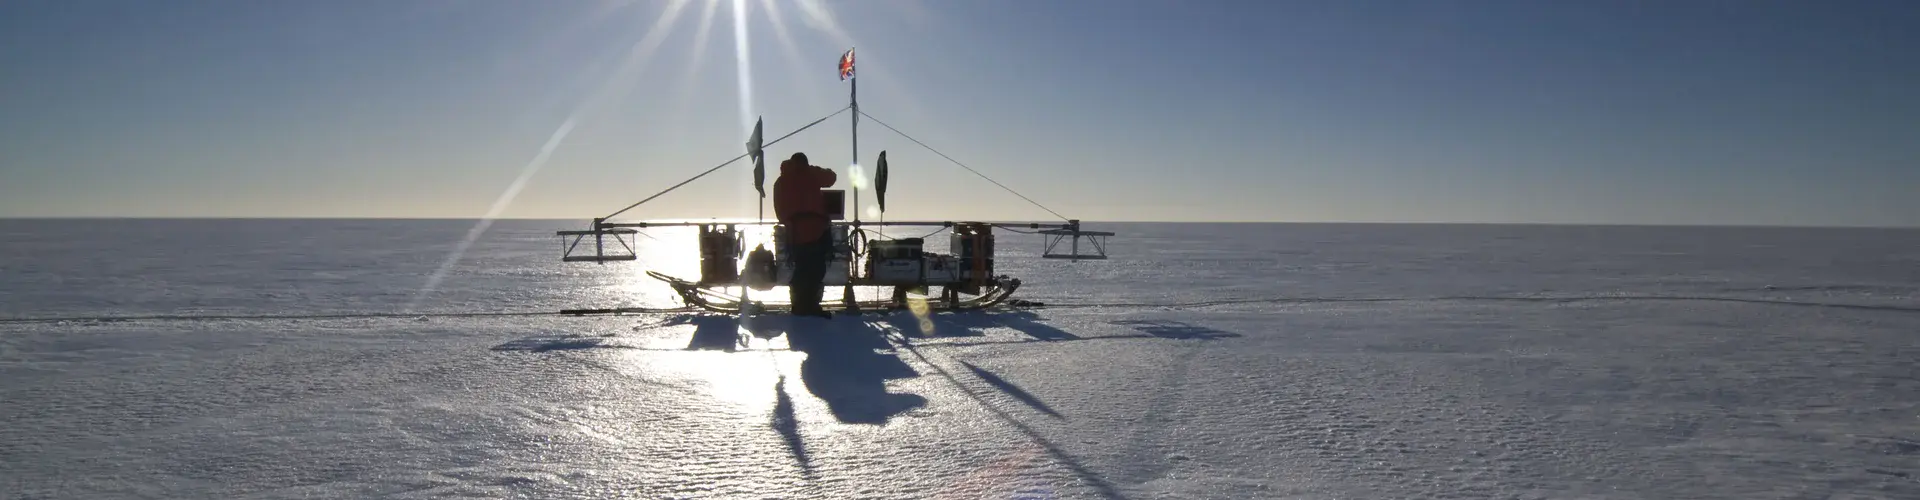 BAS radar sledge on the Larsen Ice Shelf (Credit: Adam Clark, British Antarctic Survey (BAS))